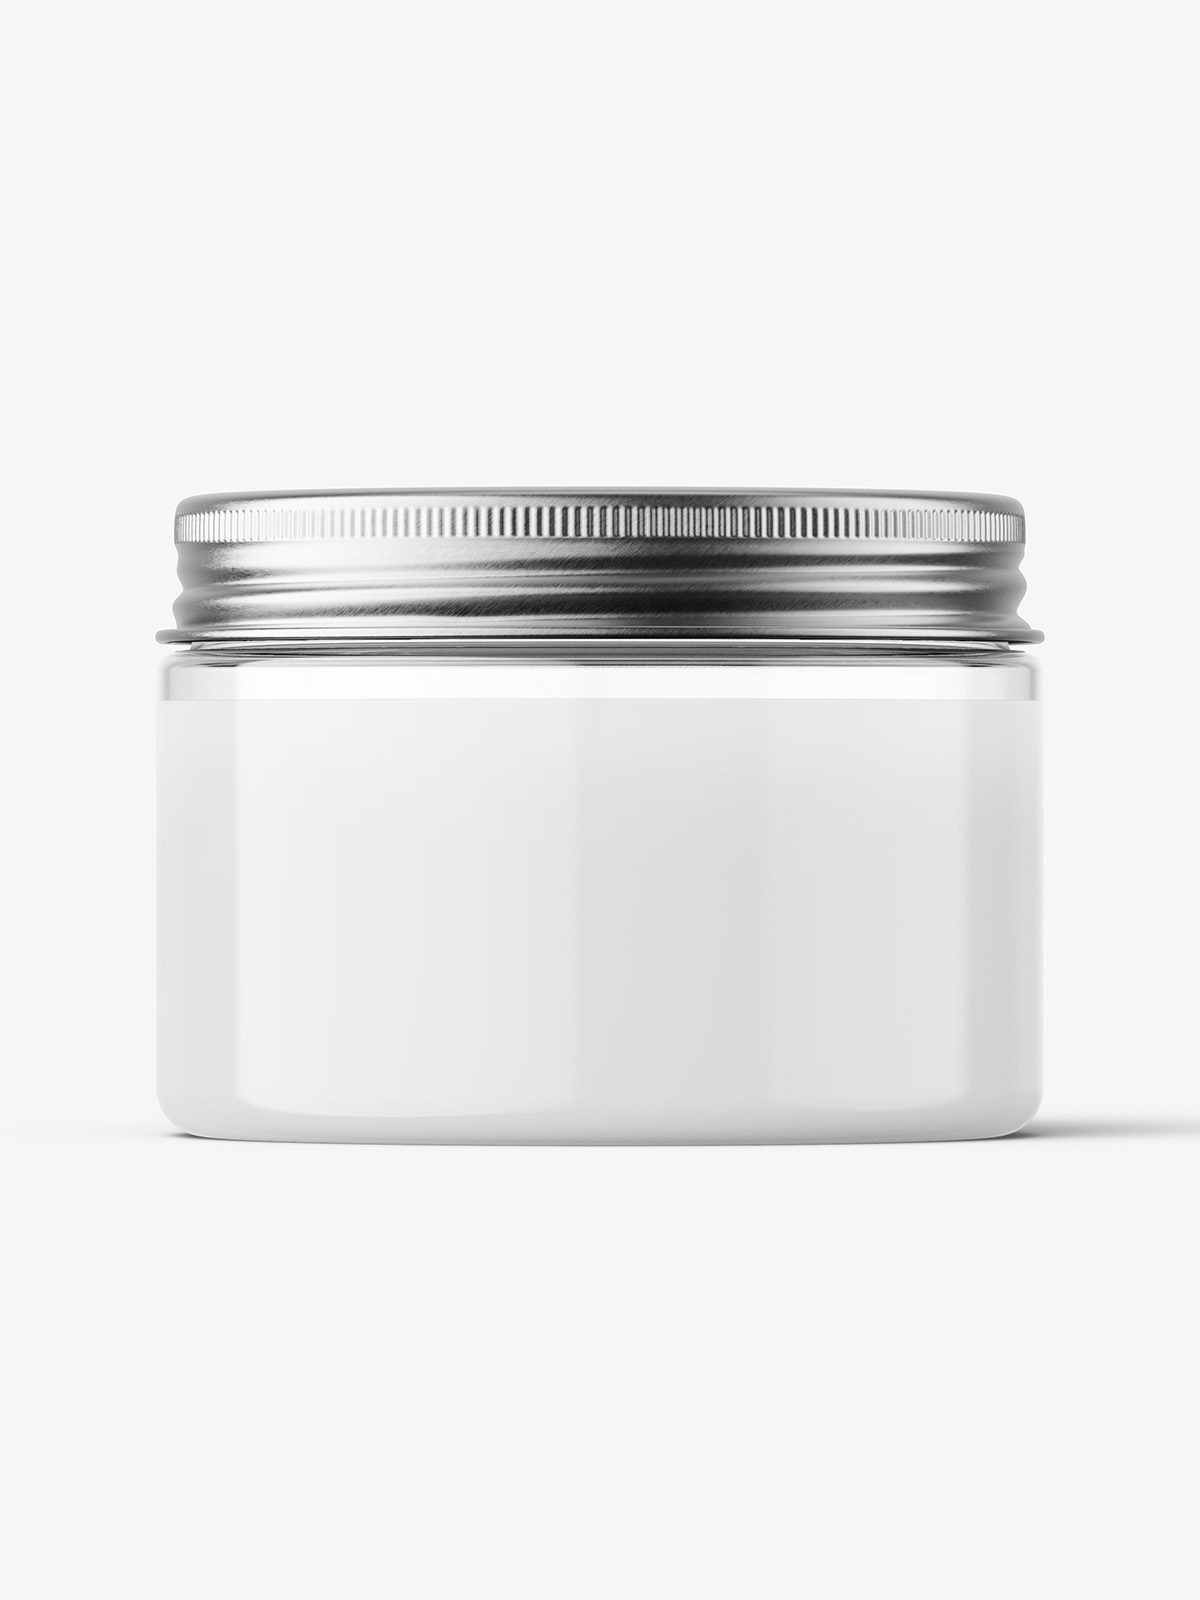 Download Transparent Jar With Metallic Cap Mockup 150ml Smarty Mockups PSD Mockup Templates